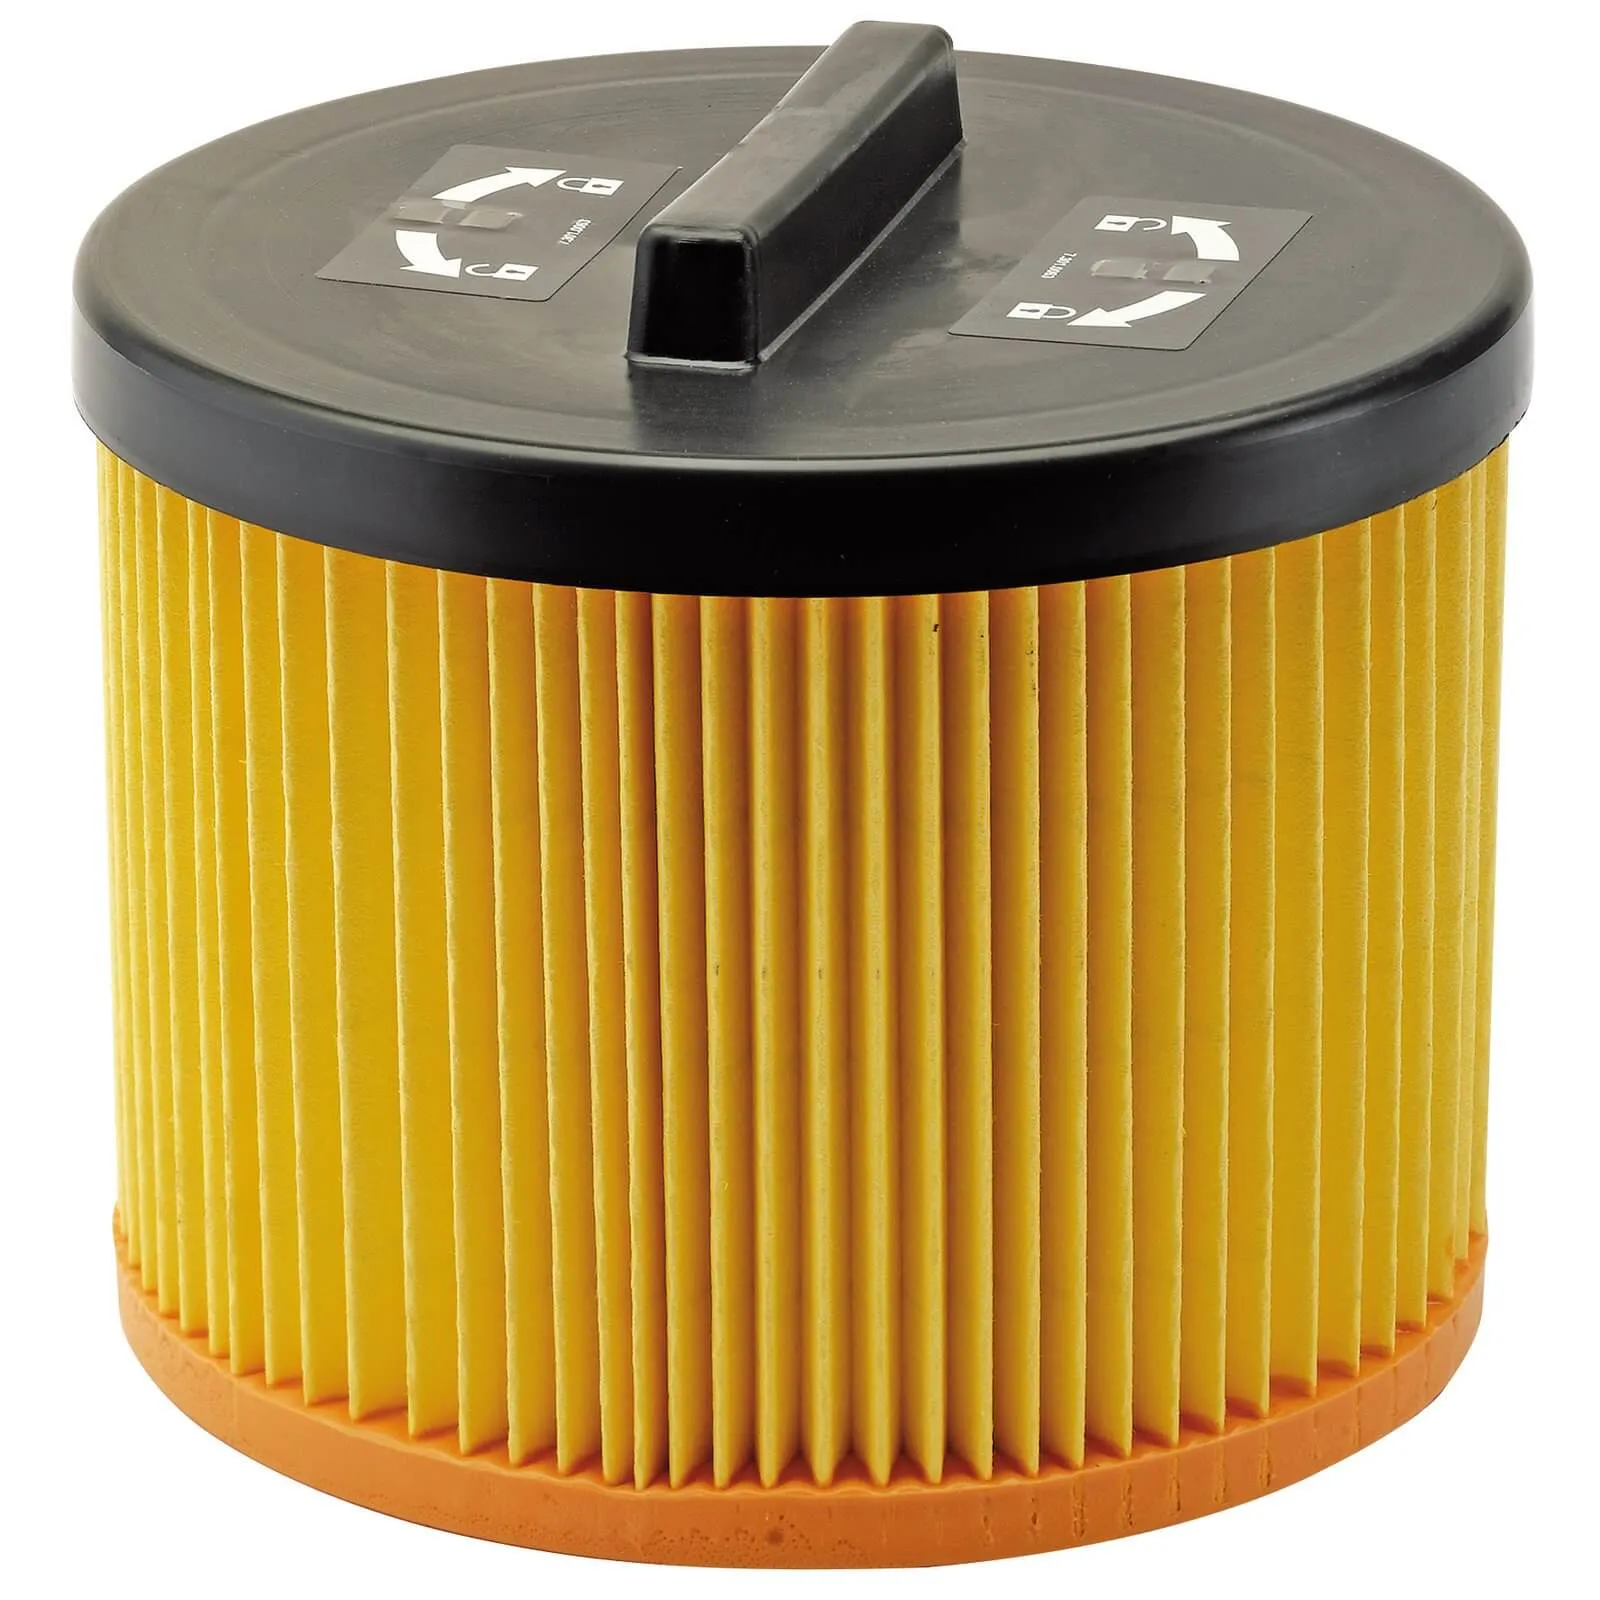 Draper Hepa Cartridge Filter for WDV50SS Vacuum Cleaners